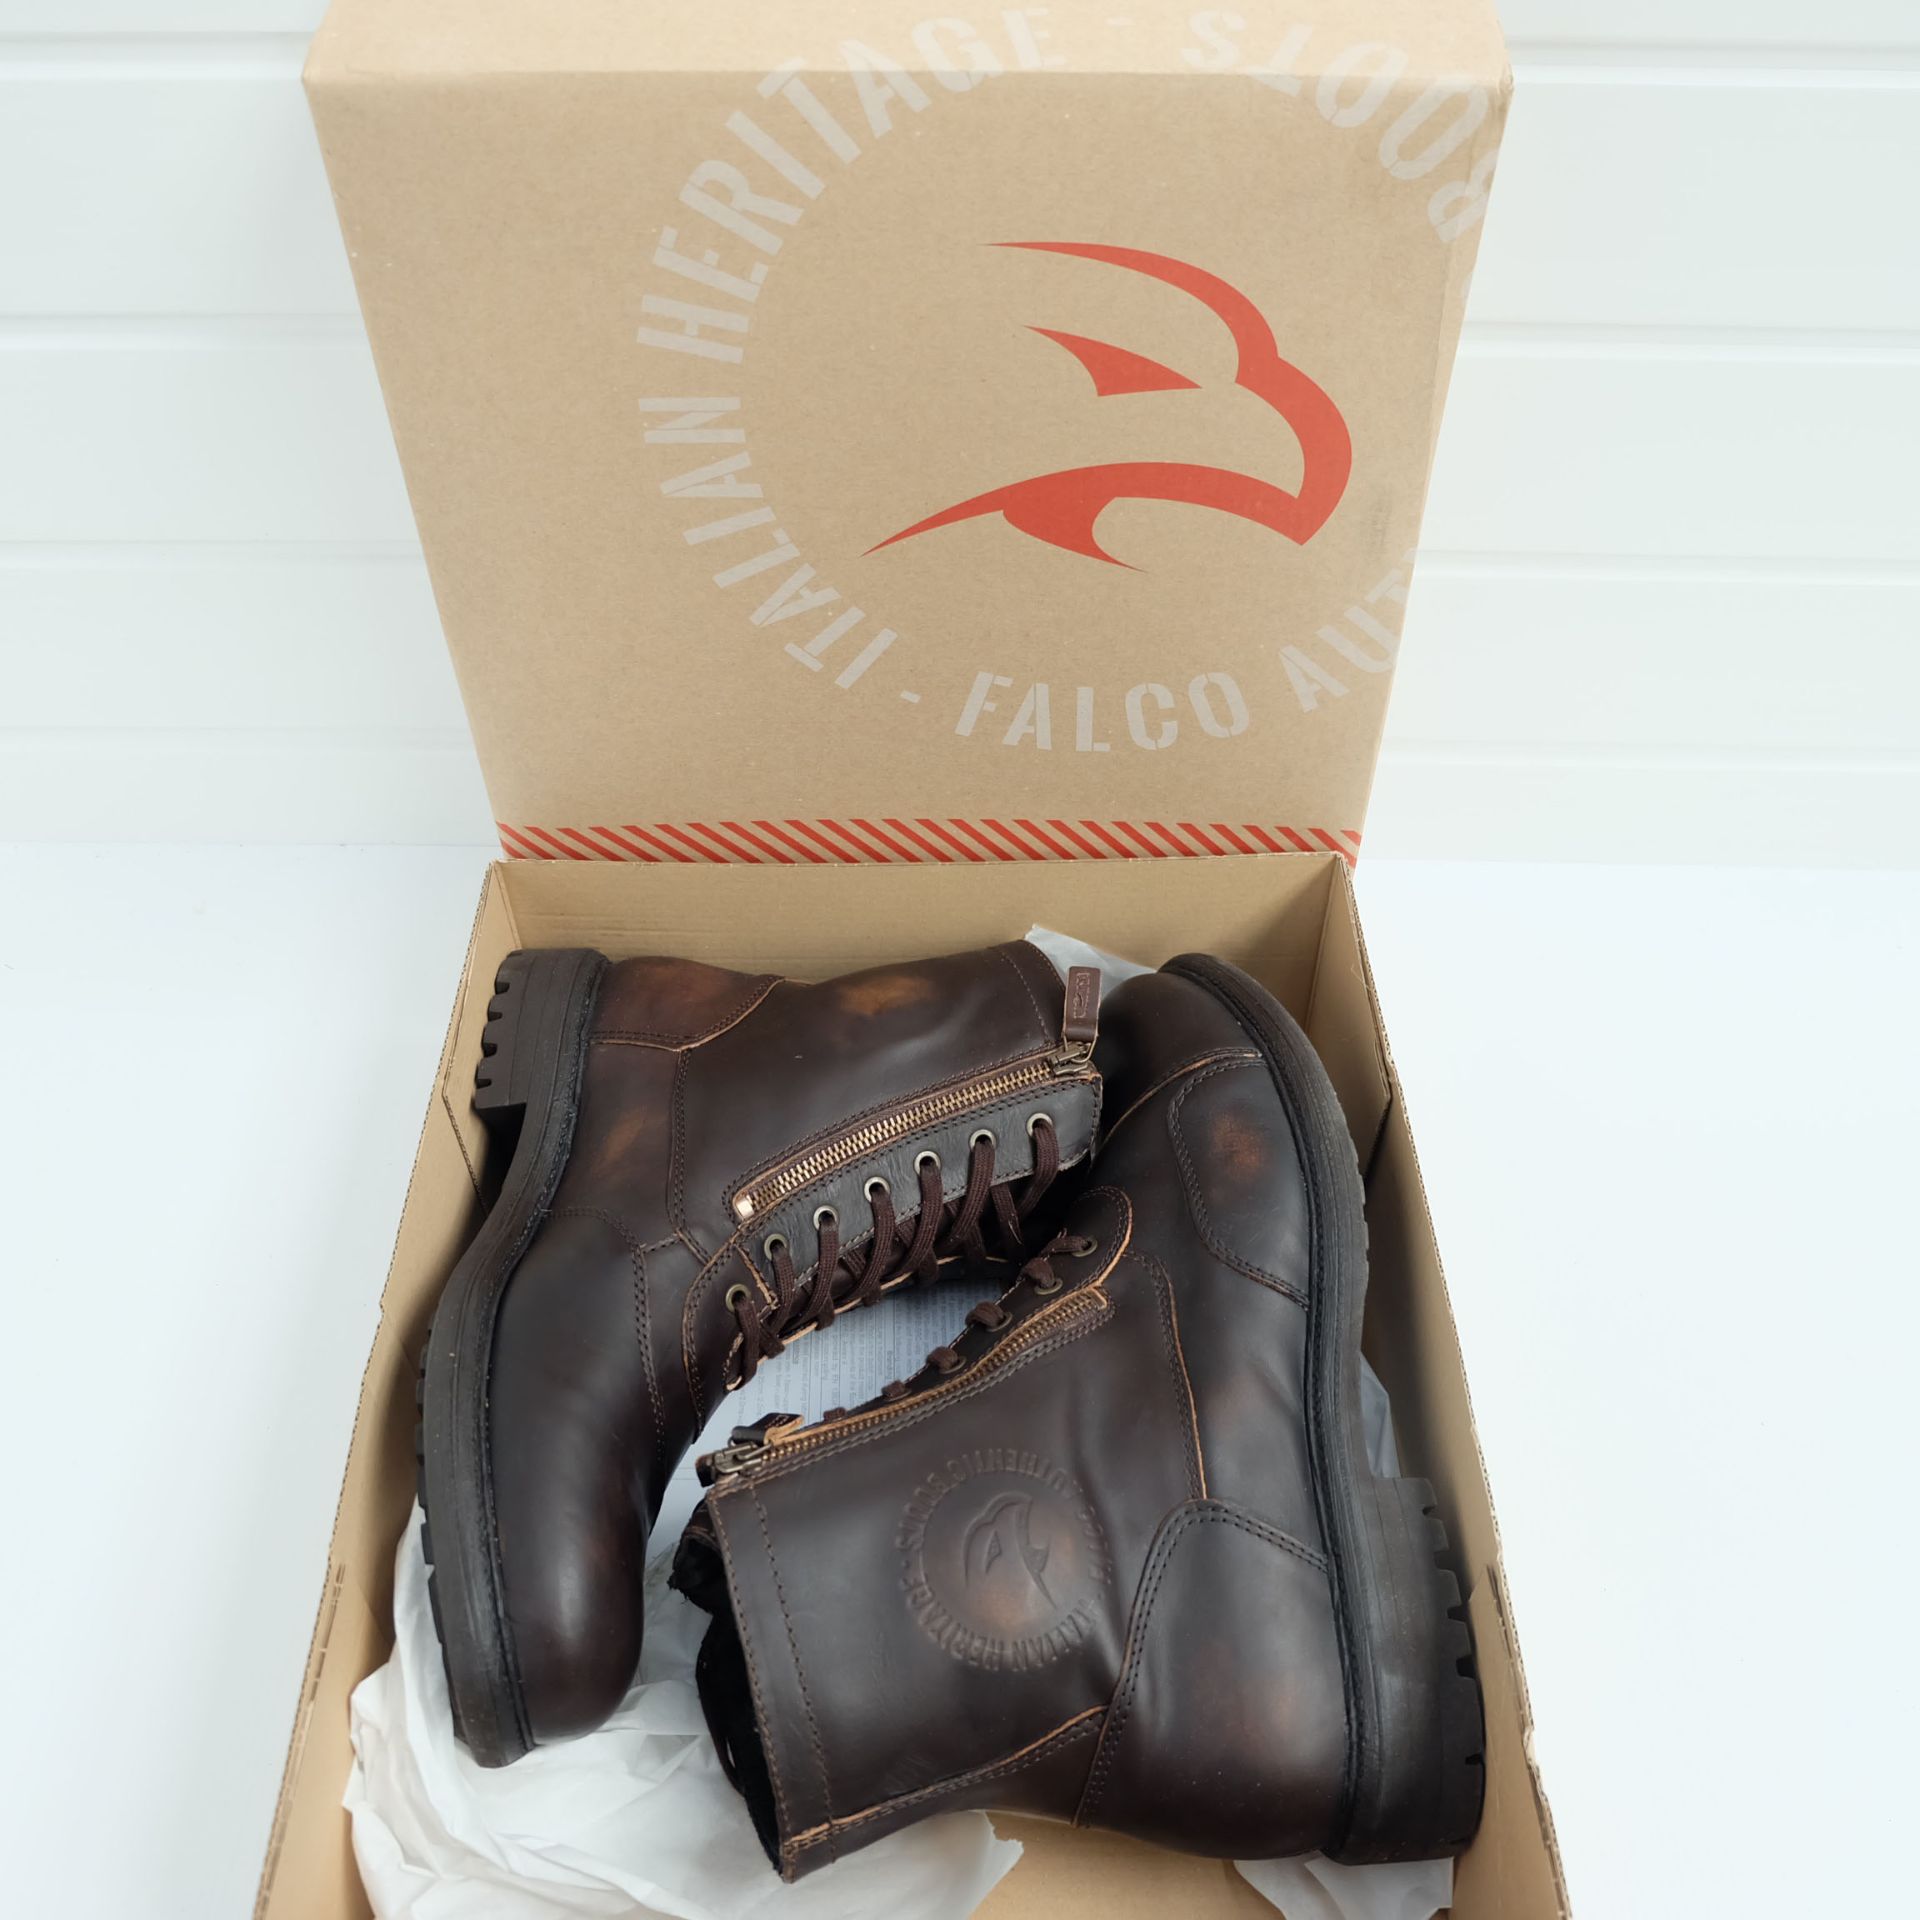 Falco Aviator Aged Leather Waterproof Short Boots 46/UK11.5